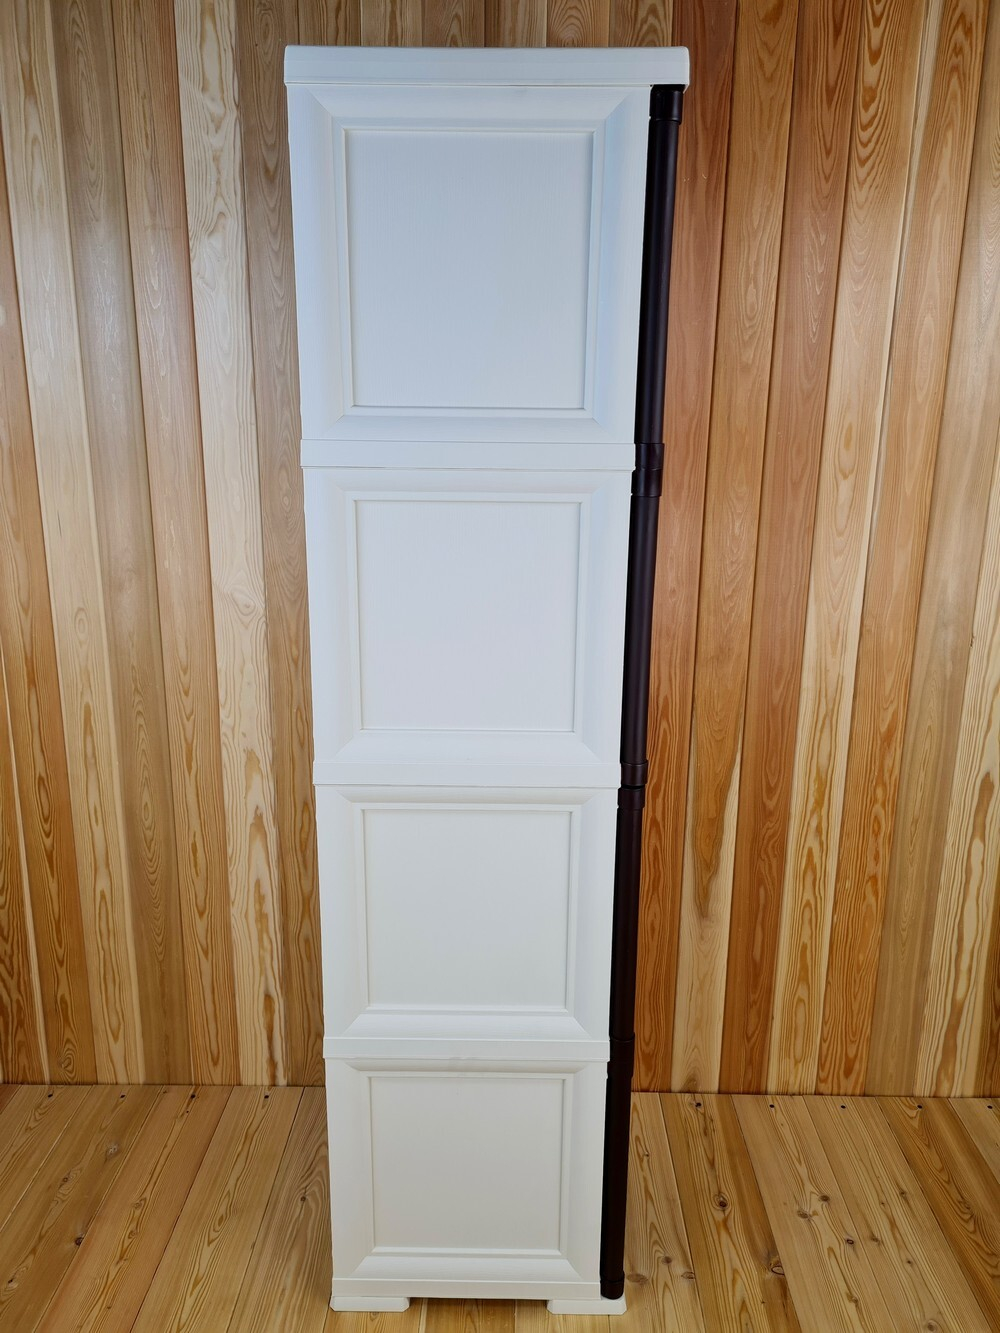 Шкаф высокий, с усиленными рёбрами жёсткости "УЮТ", 40,5х42х161,5 h, 2 плетёных дверцы. Цвет: Бежево-коричневый. Арт: Э-041-БД